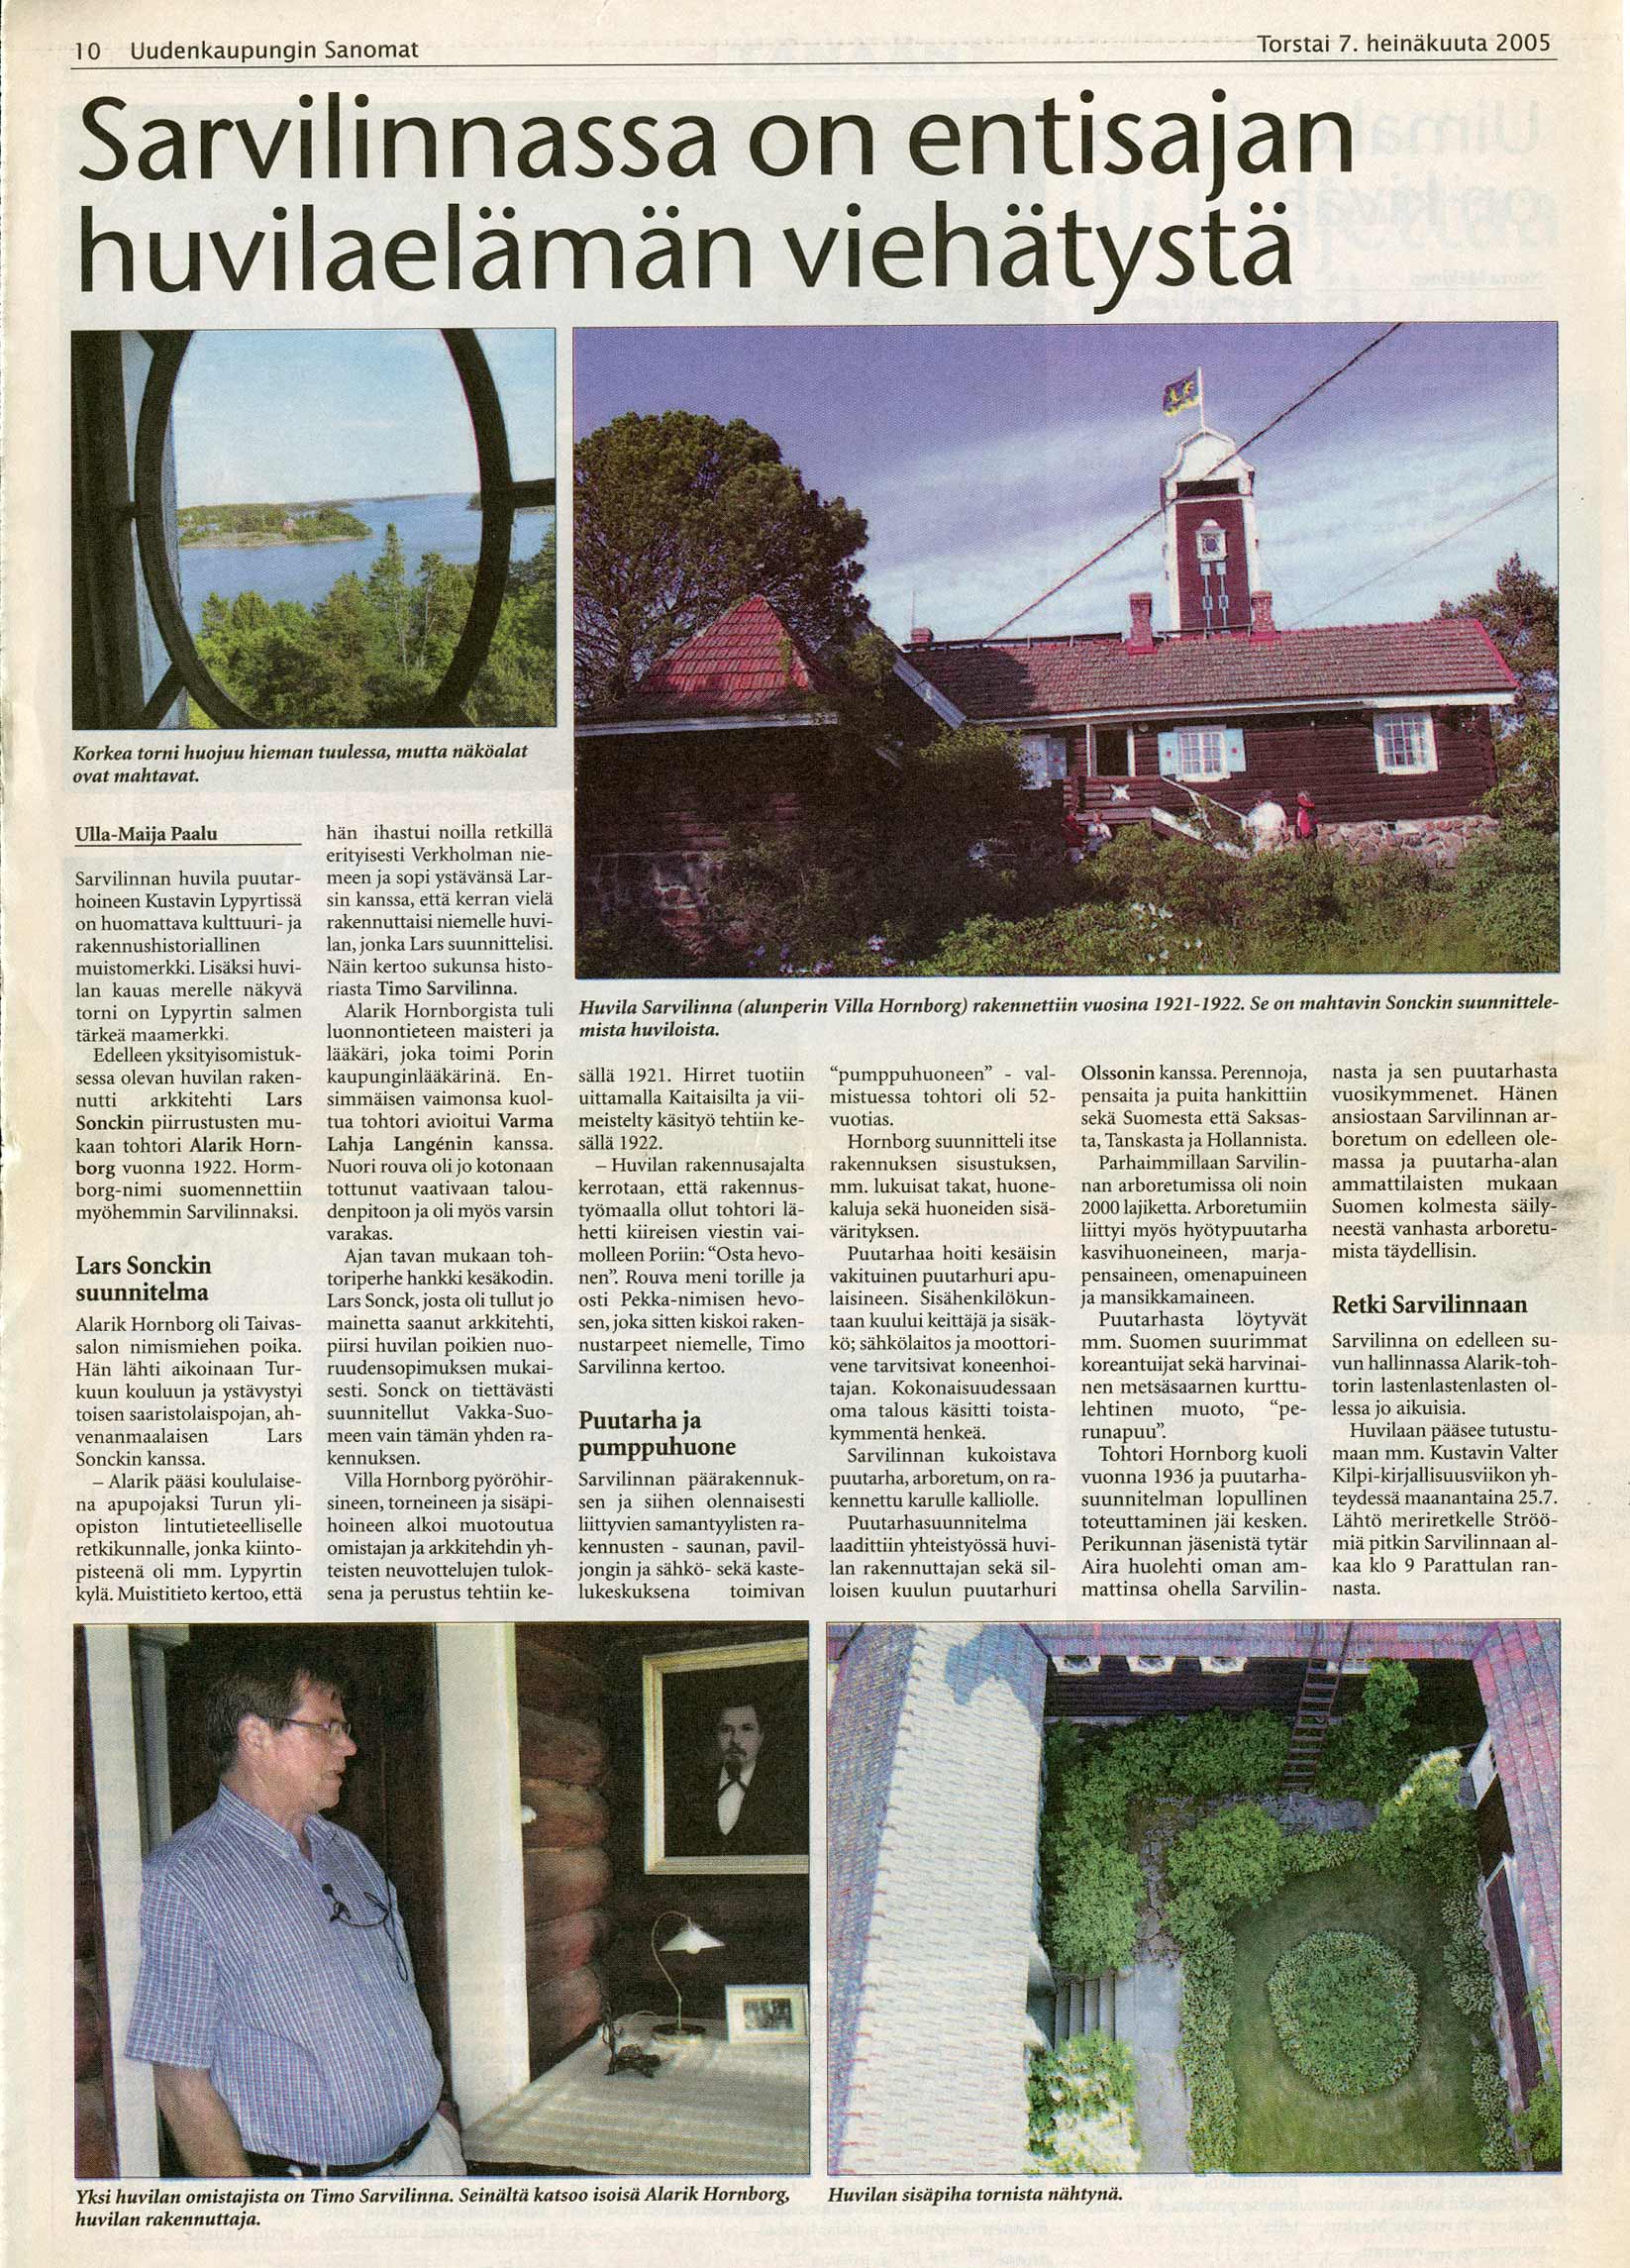 Uudenkaupungin Sanomat 7.7.2005